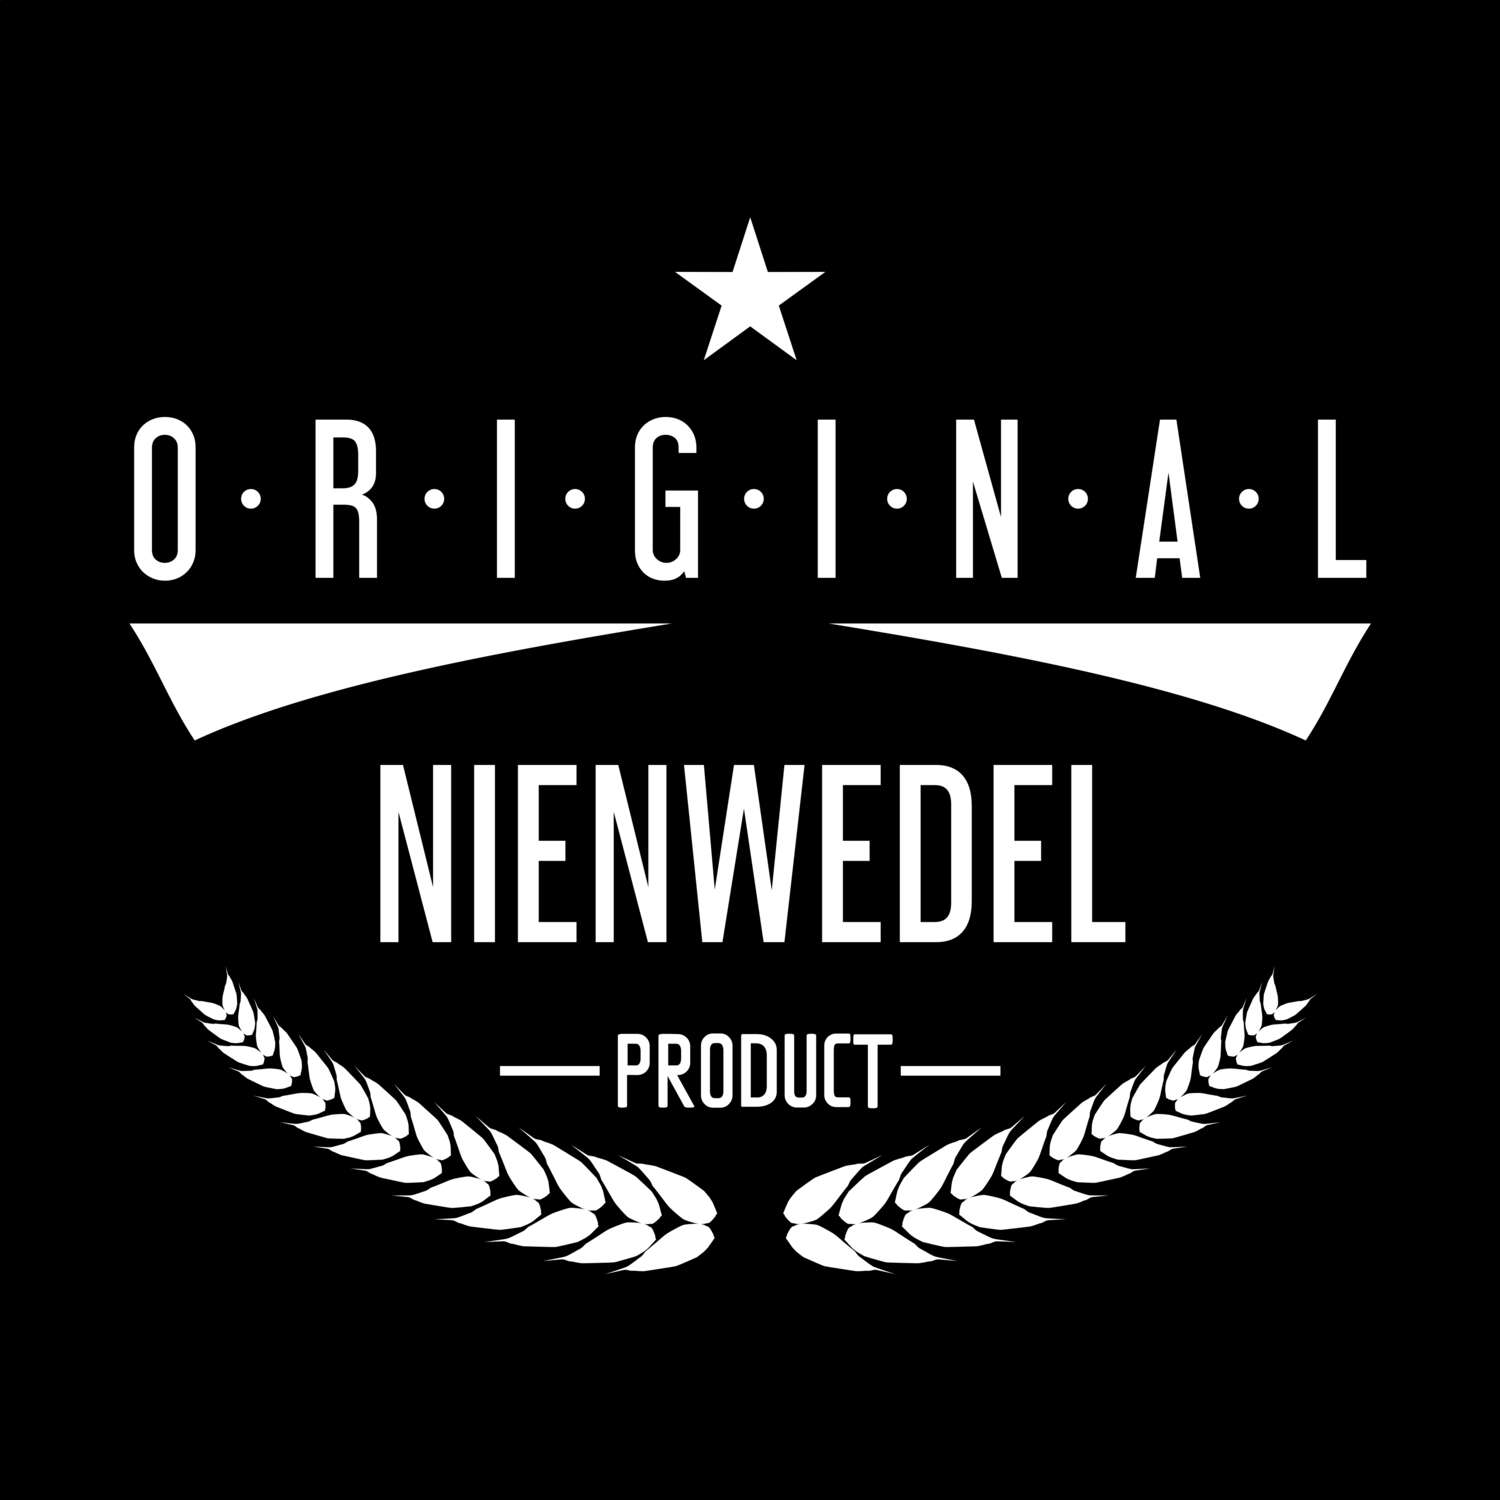 Nienwedel T-Shirt »Original Product«